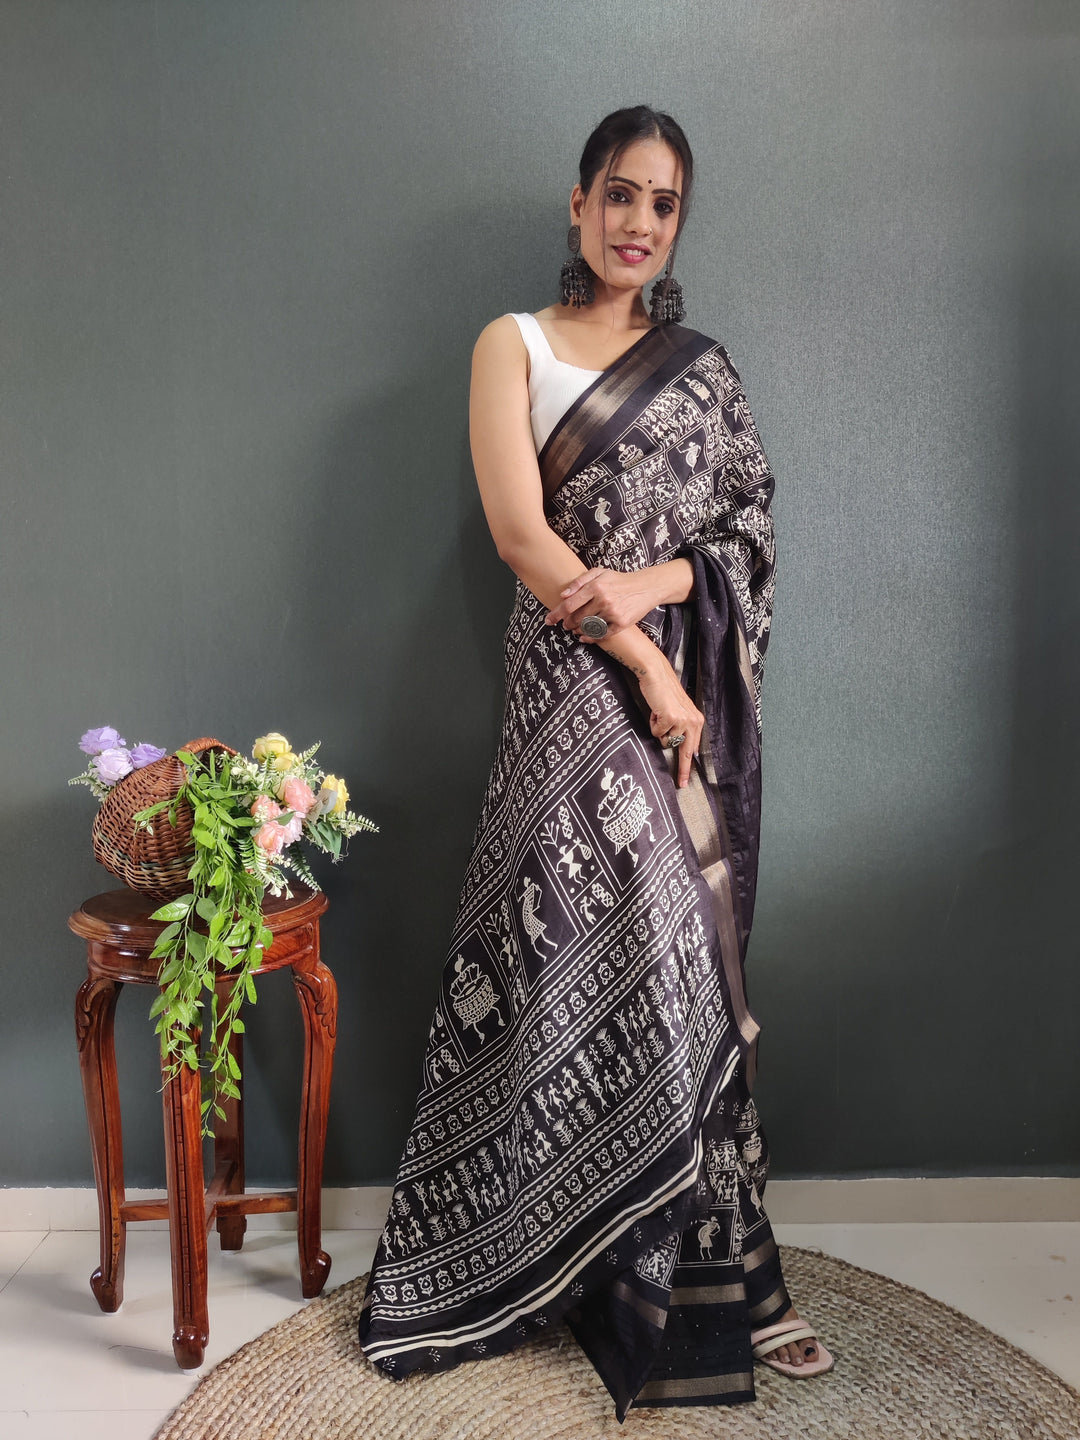 1-Min Ready To Wear Latest Shriivanta Design Saree – Black